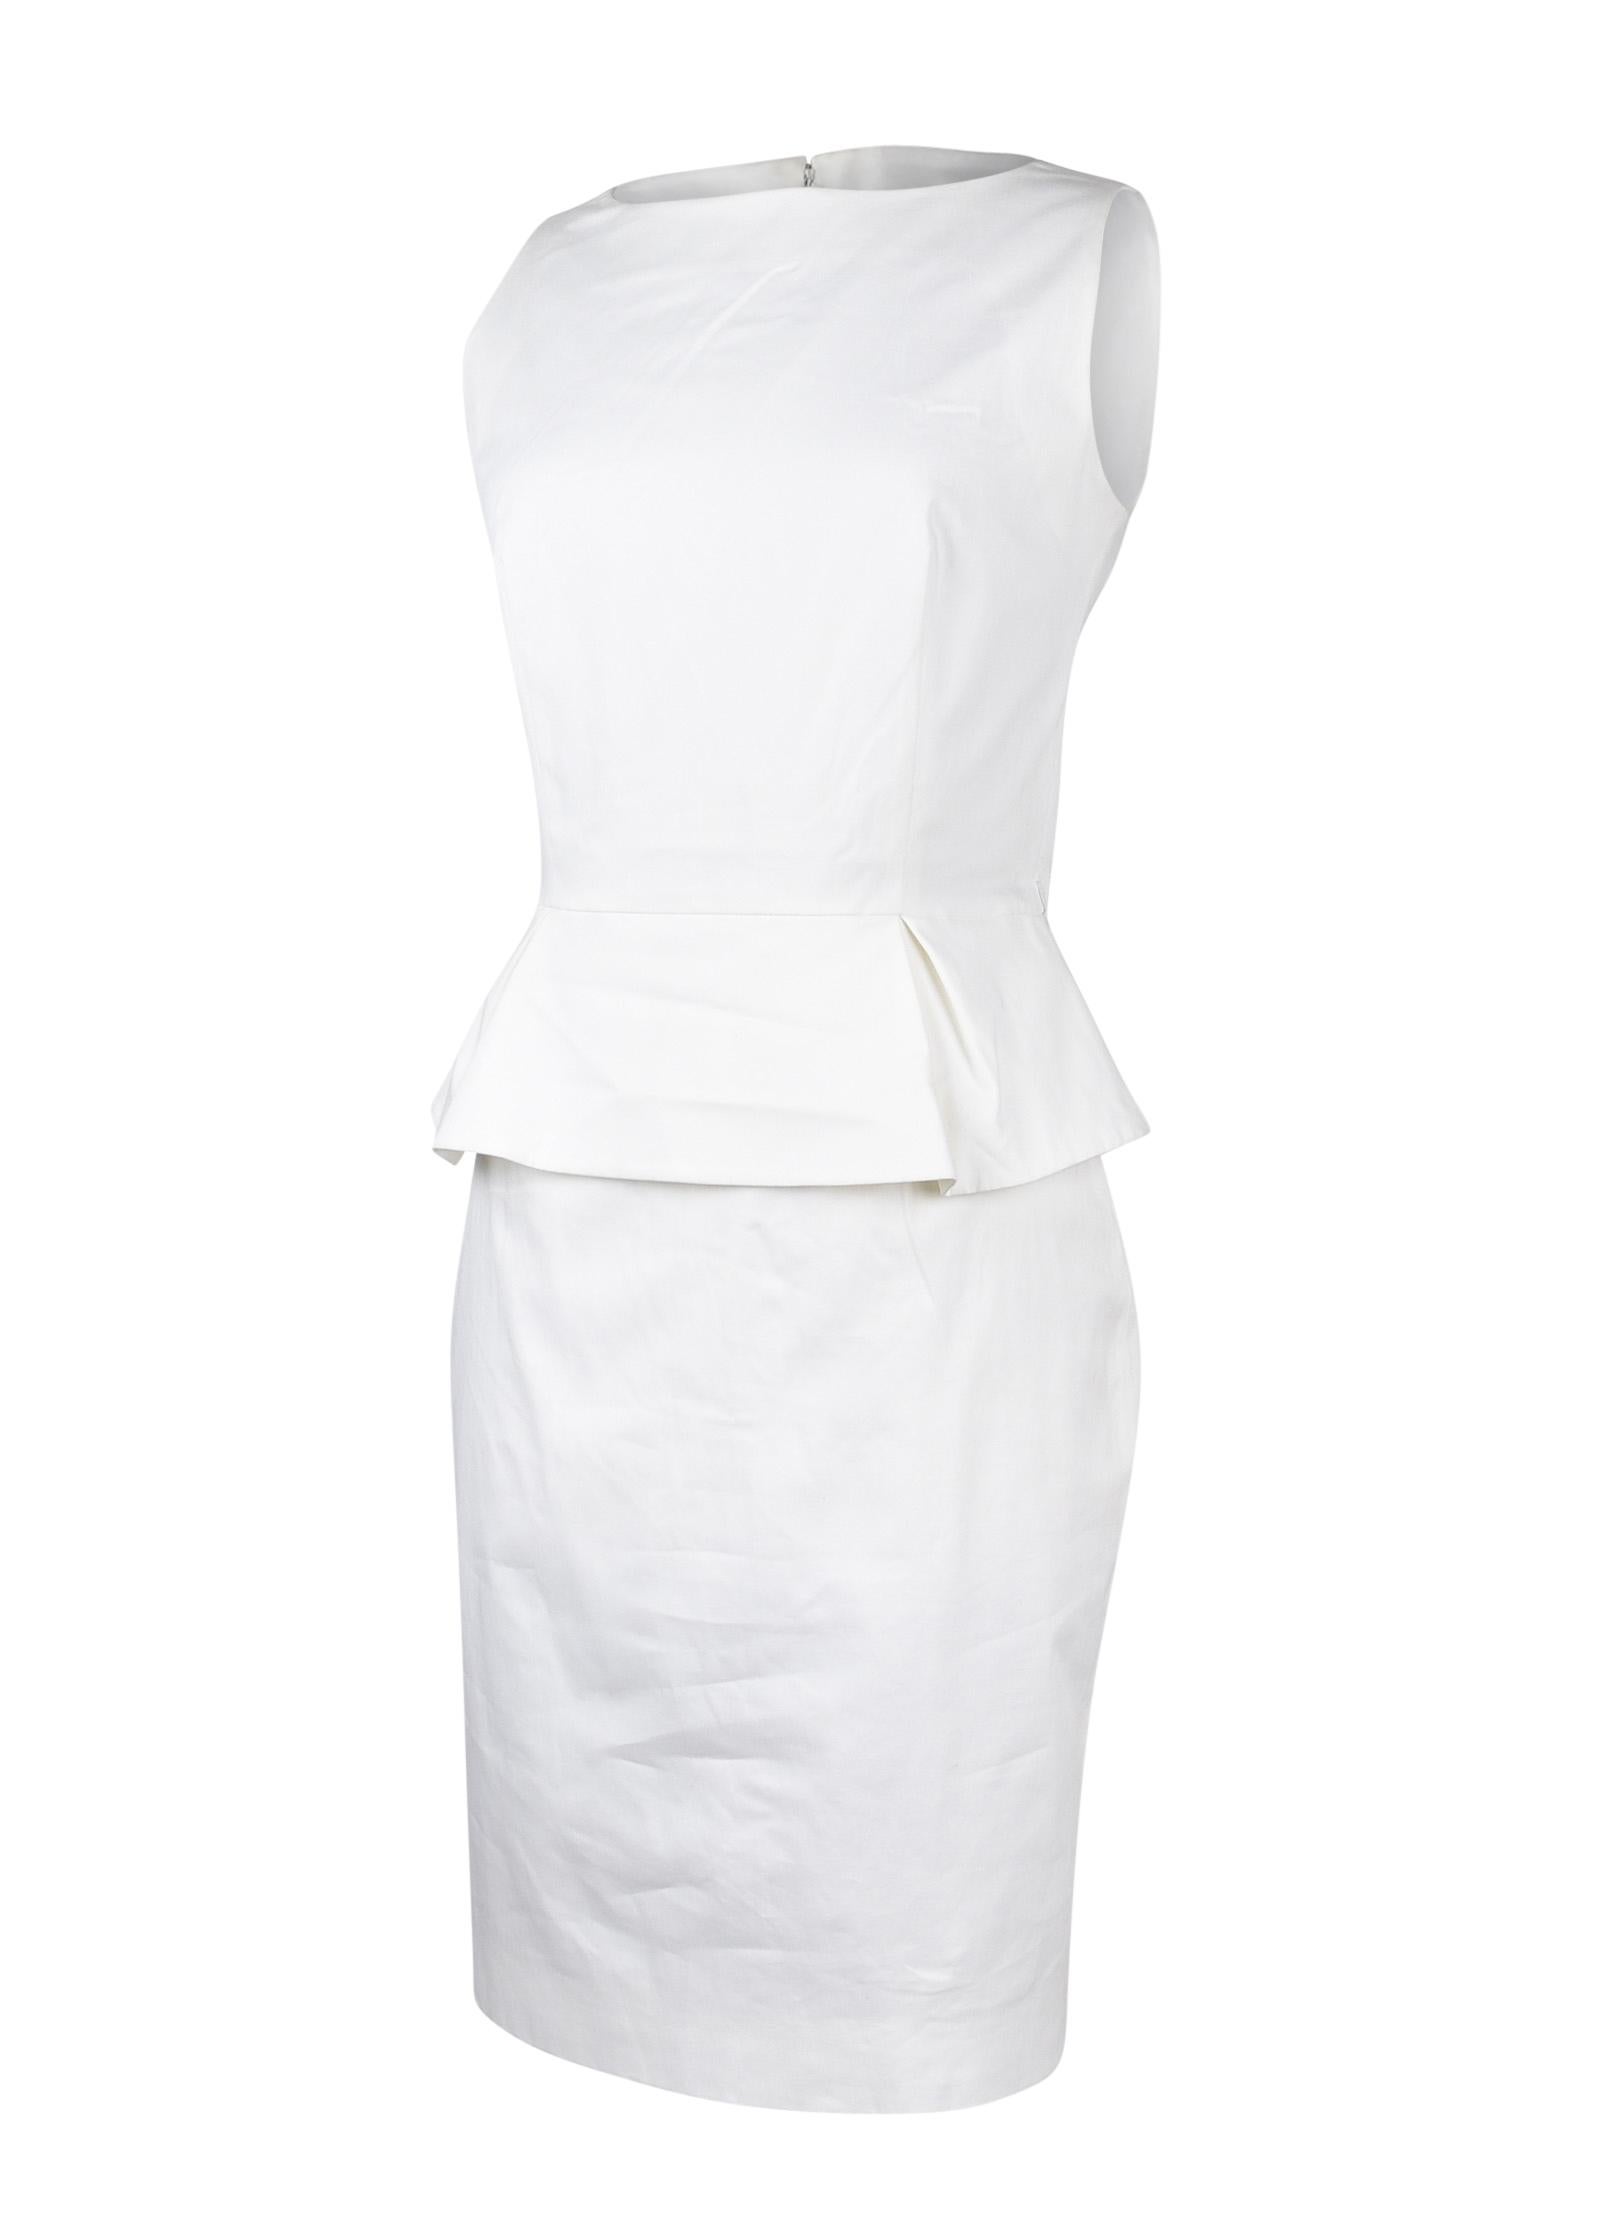 Guaranteed authentic Christian Dior white sheath pencil dress.
4.75